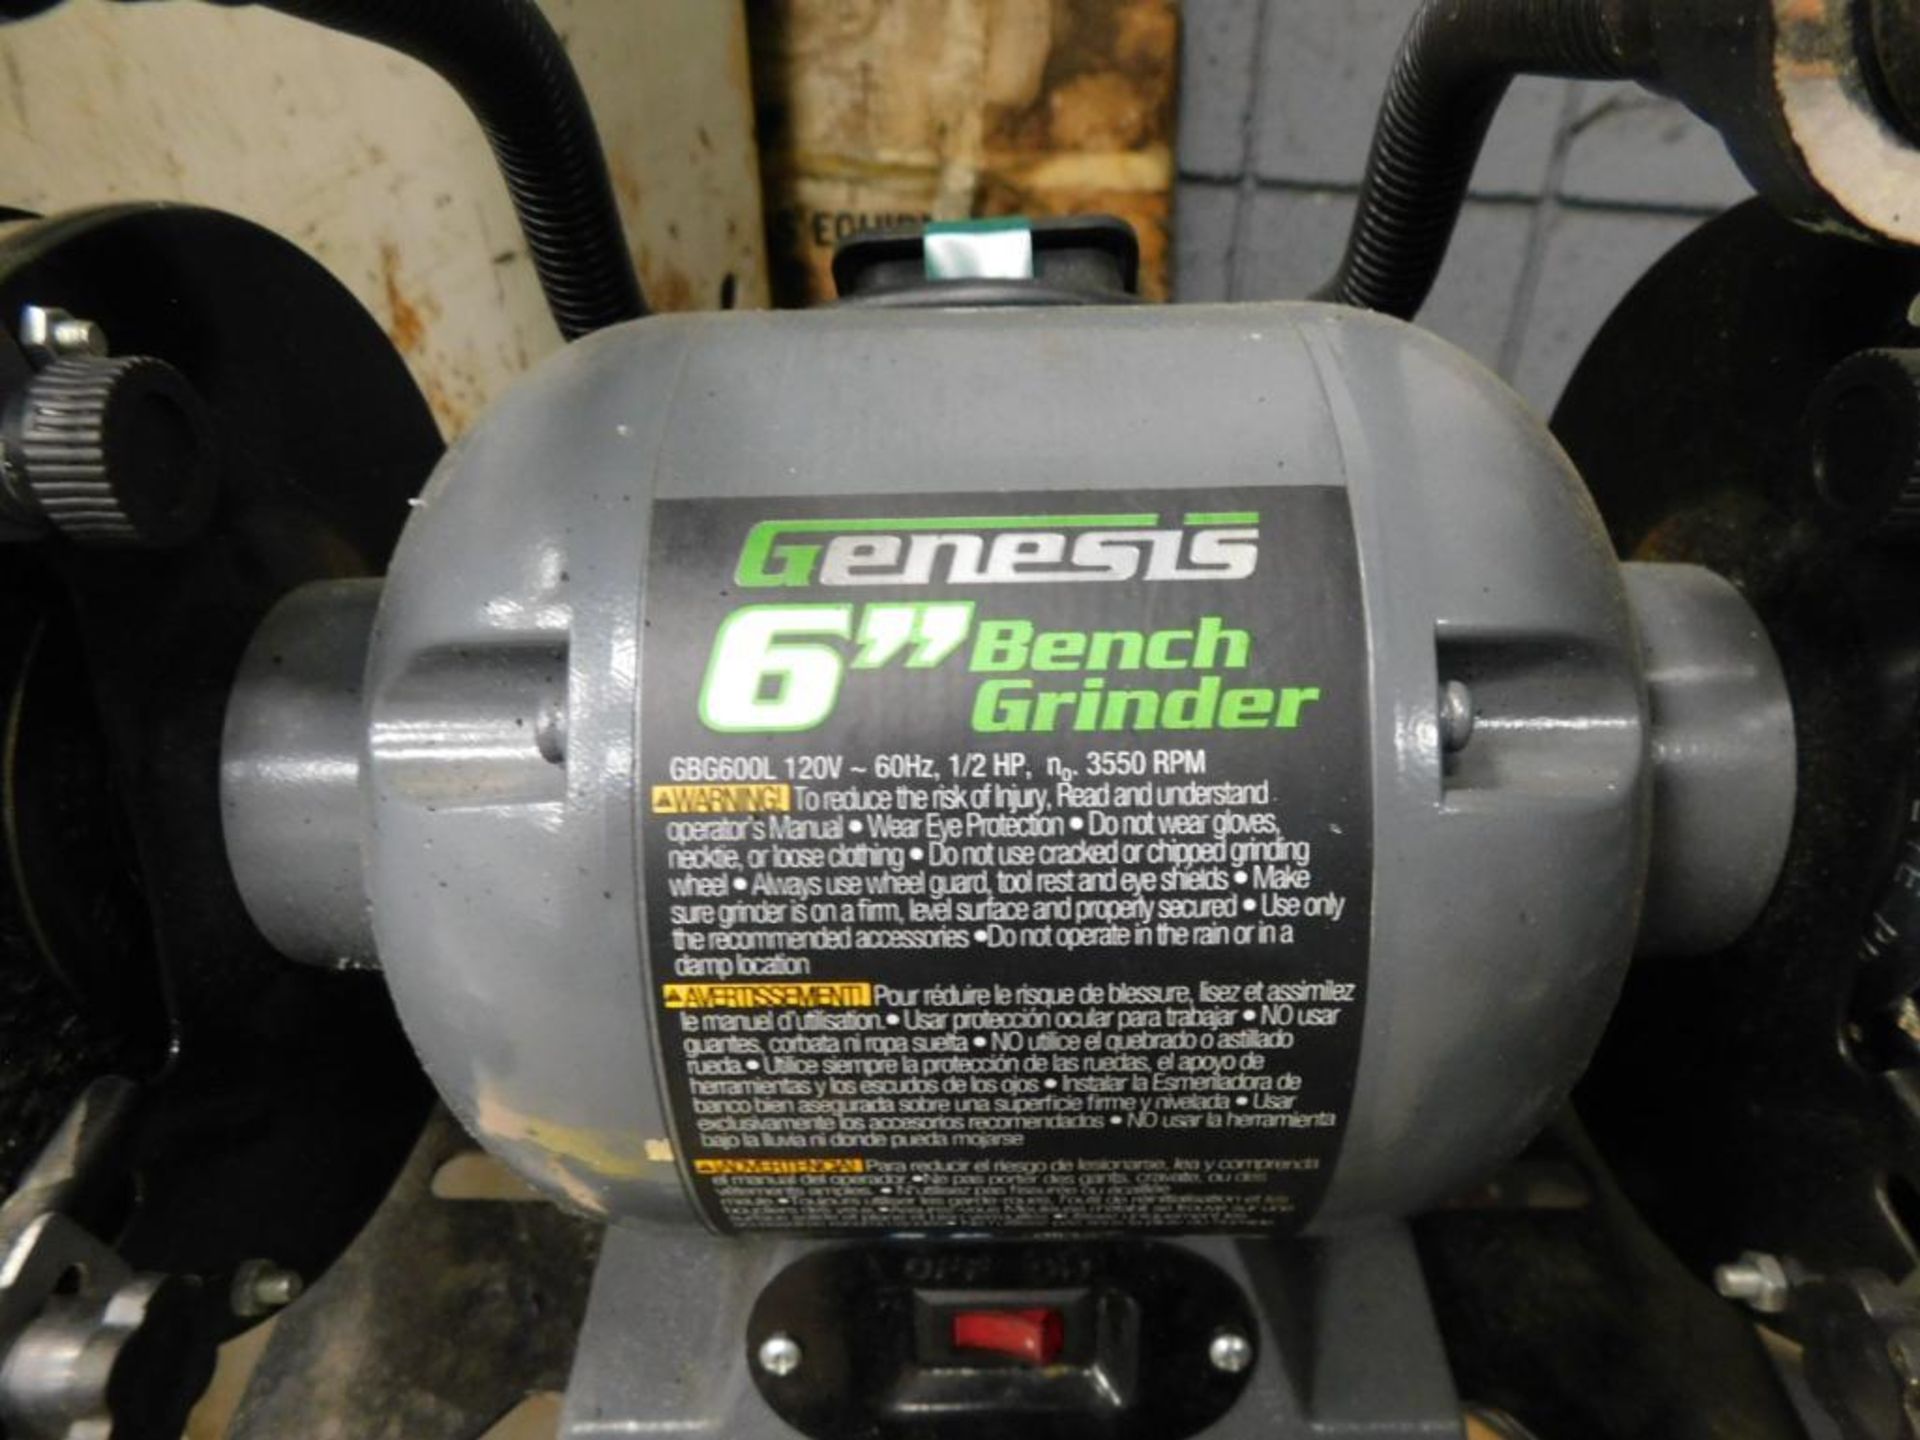 Genesis 6" Bench Grinder, 1/2 HP - Image 3 of 3